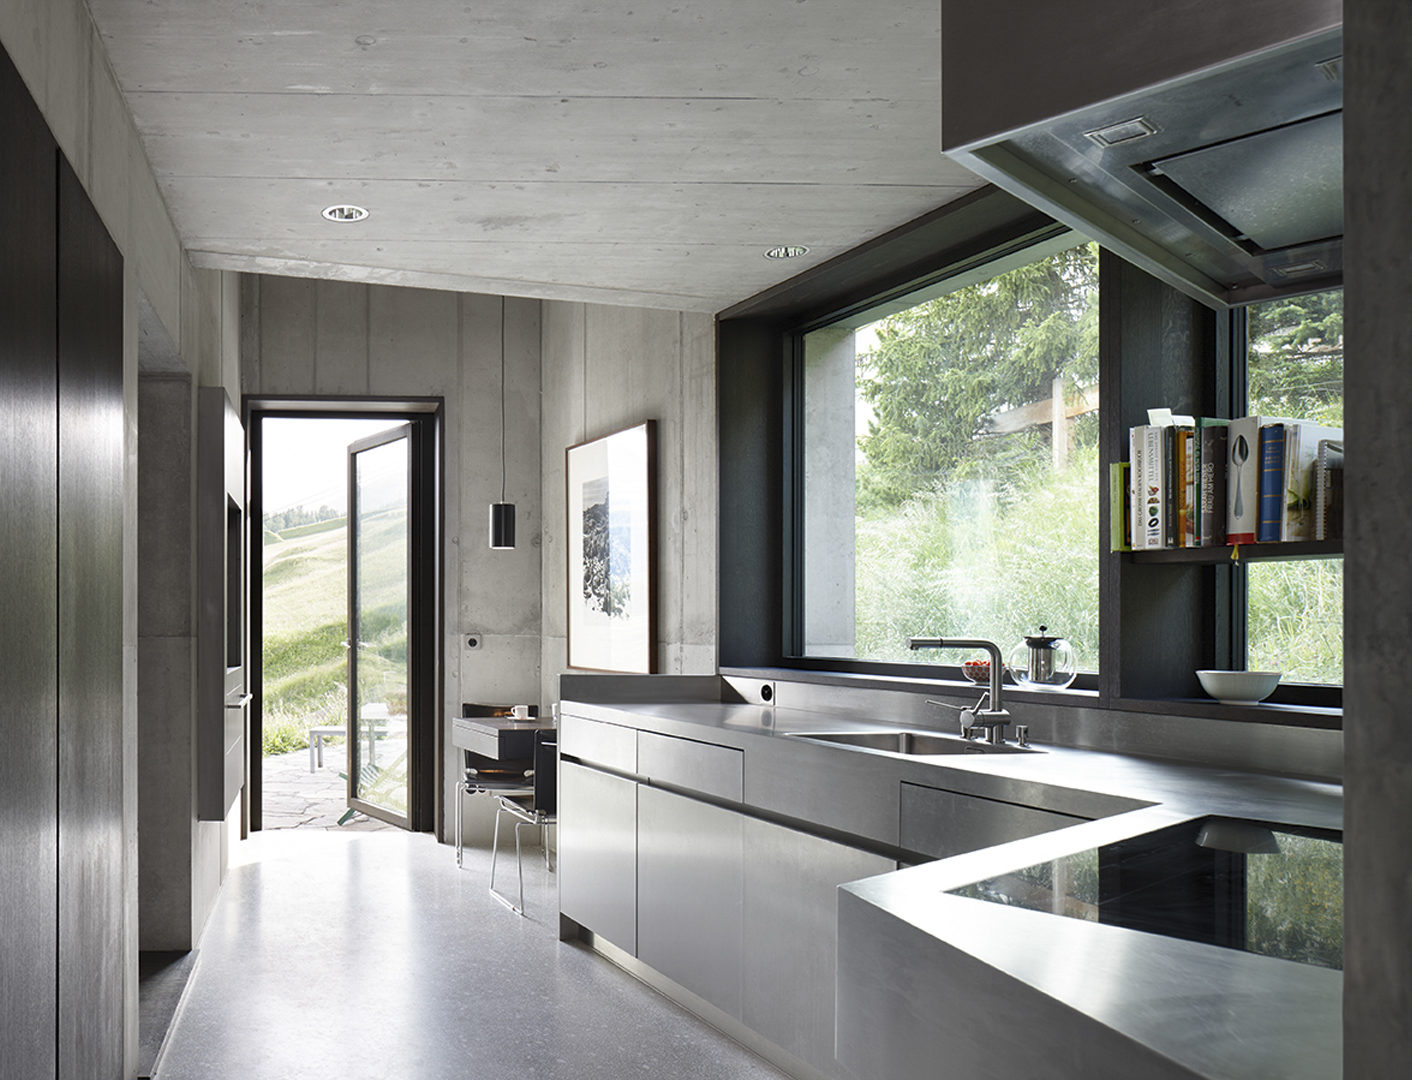 Strato_design_Non Plus Ultra_bespoke kitchen project in Switzerland_mat stainless steel_053 Men Duri Arquint